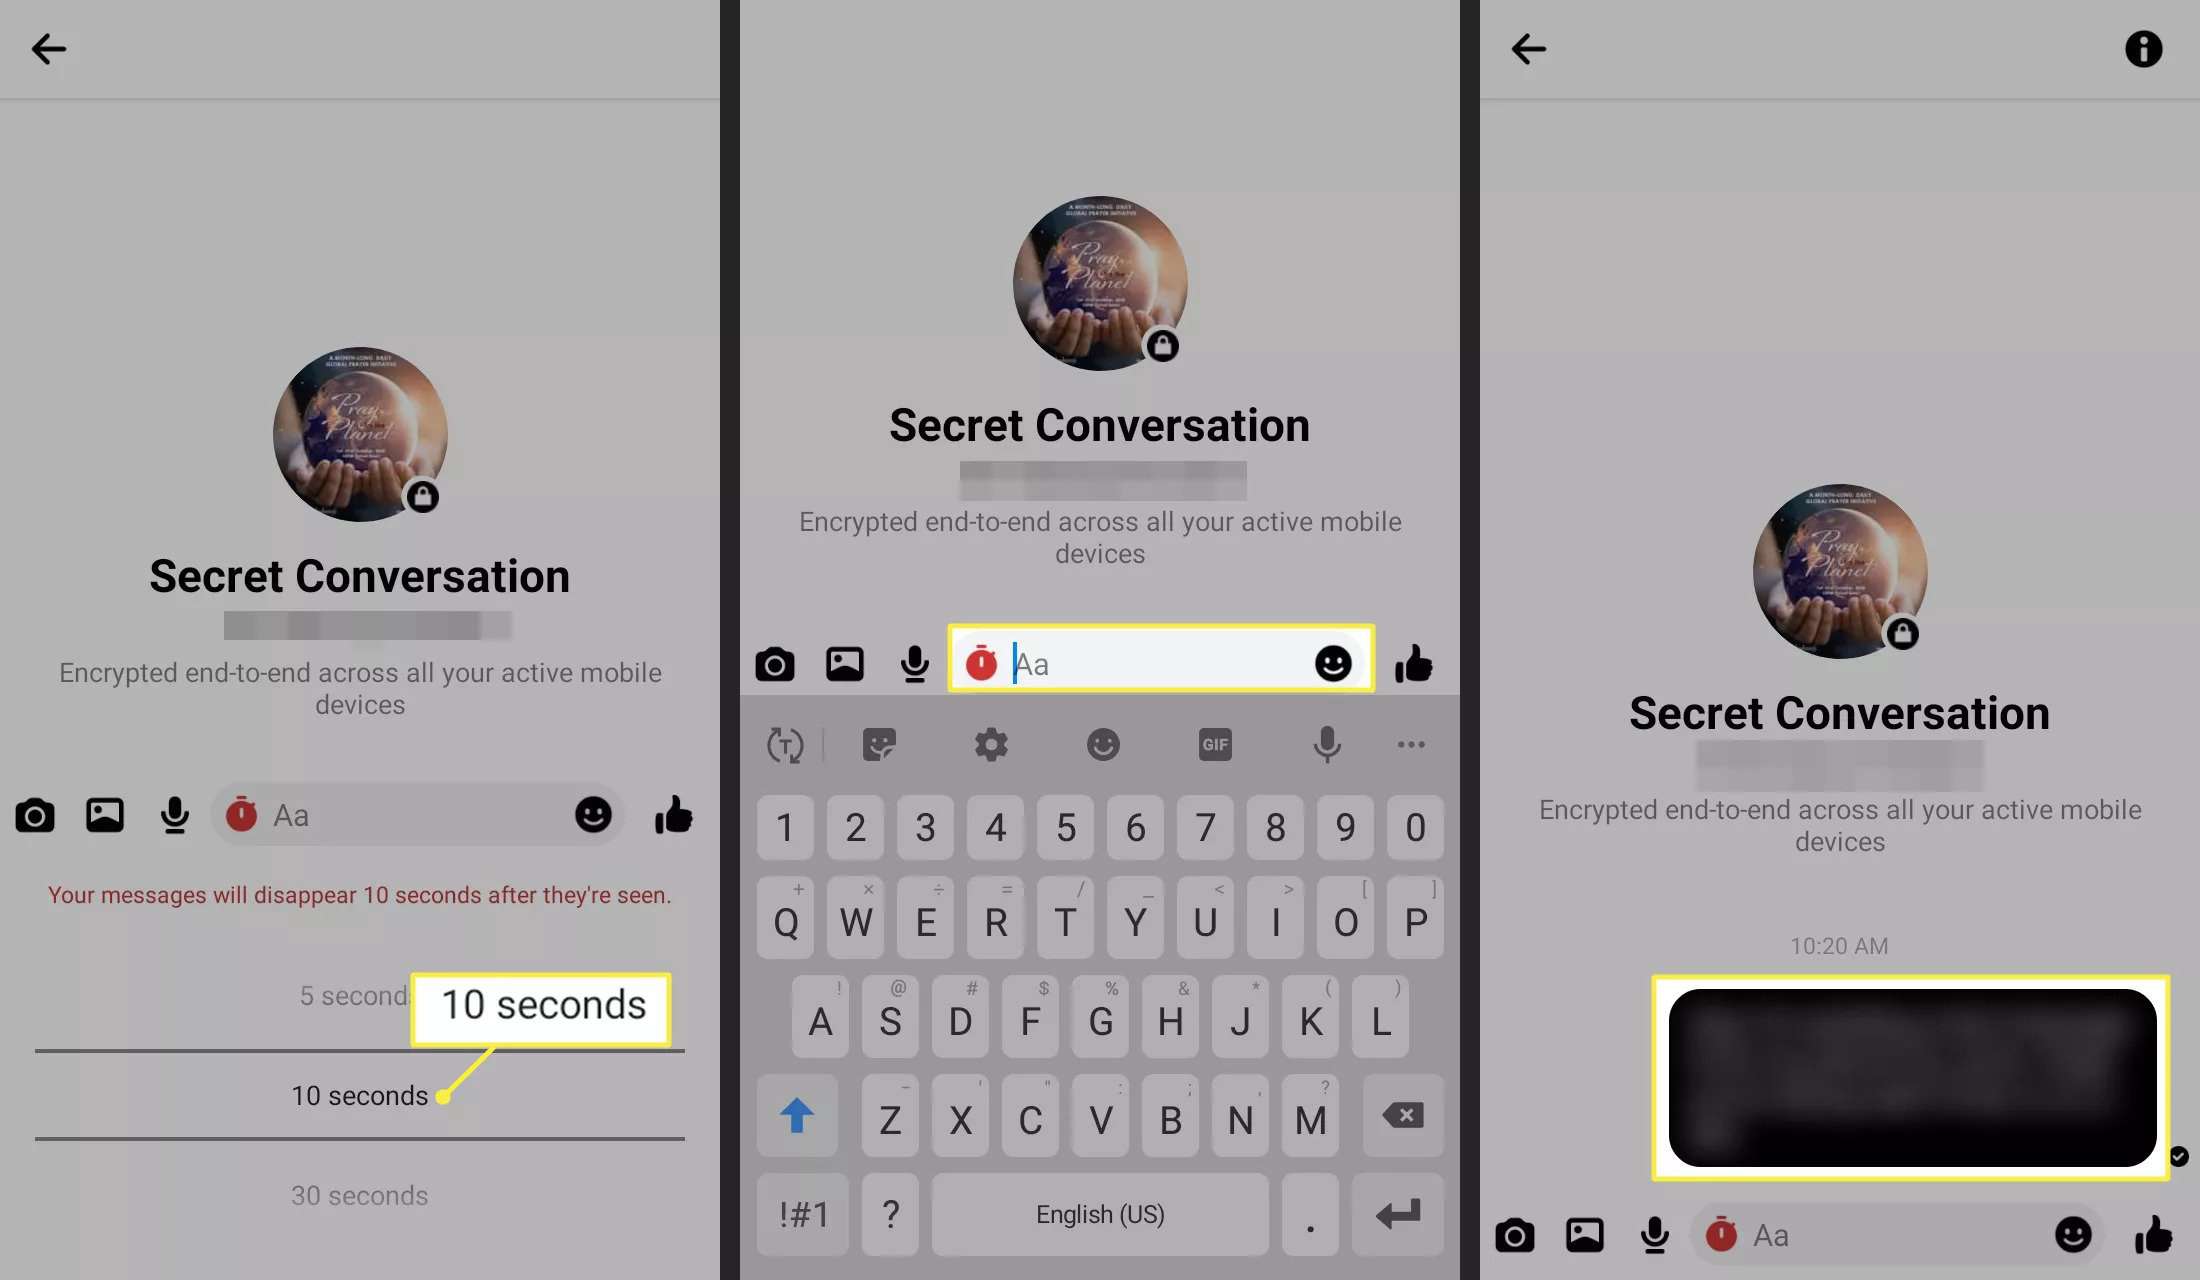 Nastavte časovač tajné konverzace ve službě Facebook Messenger